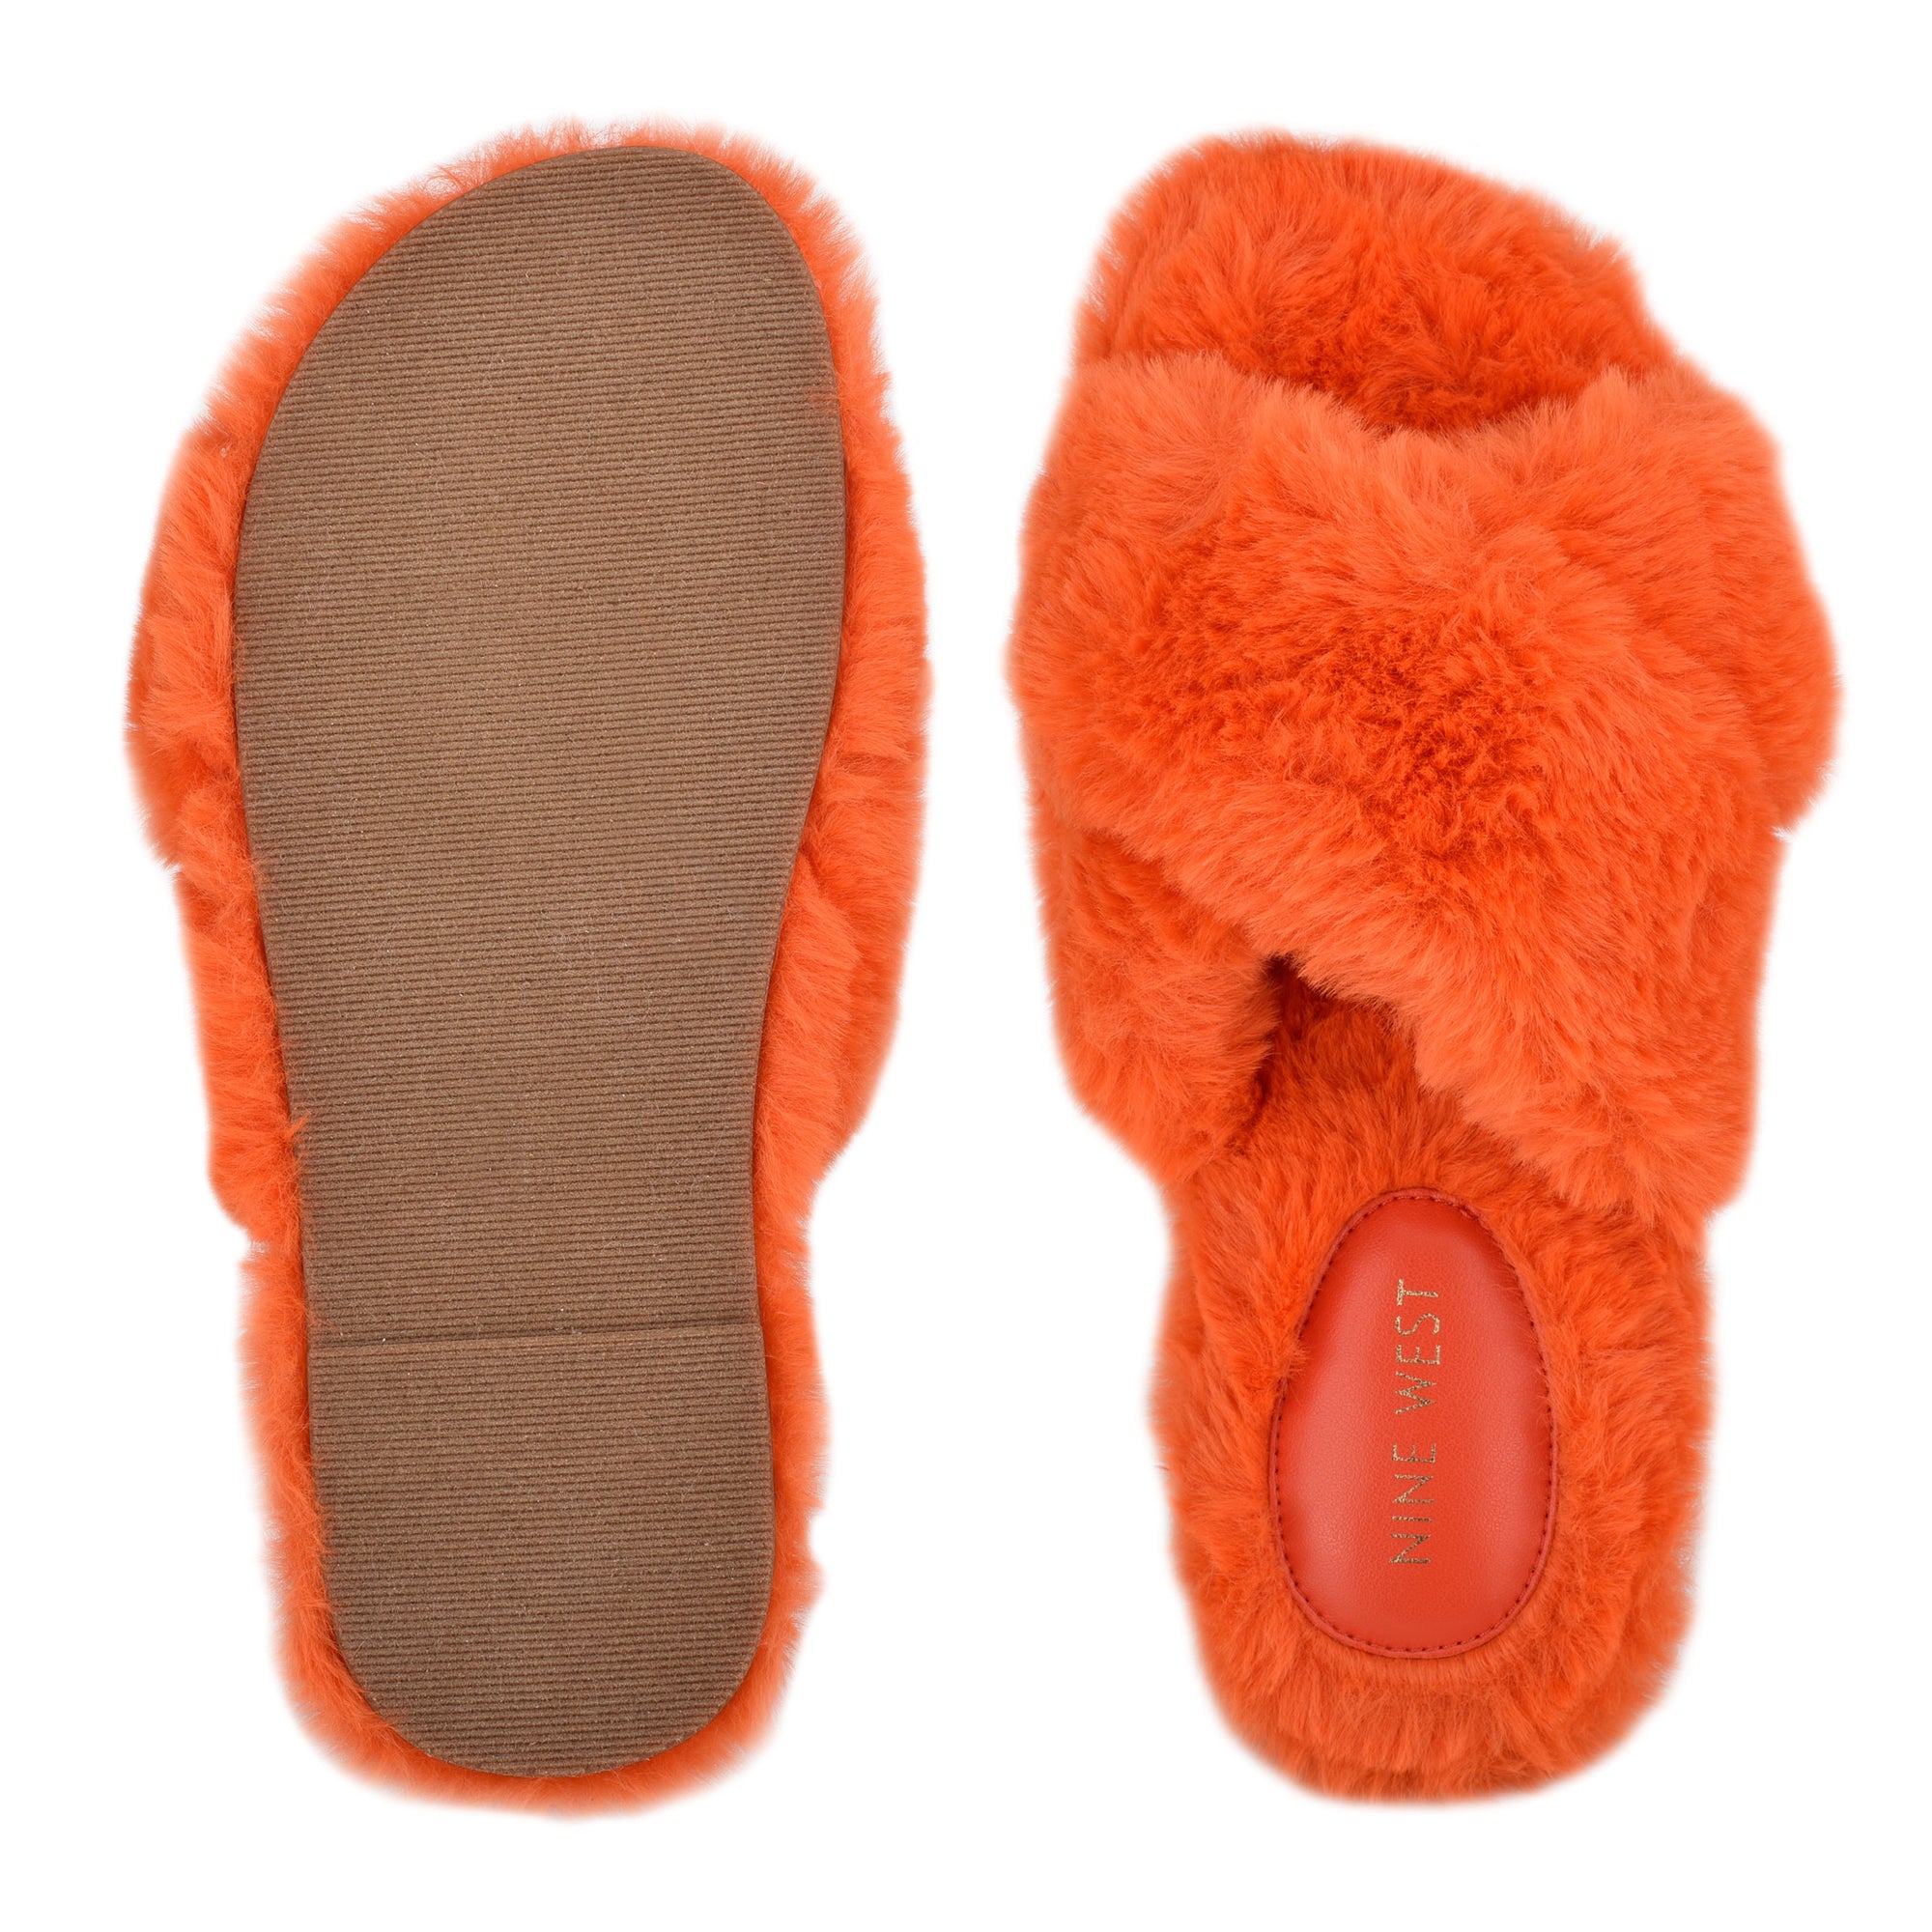 mahabis slippers amazon